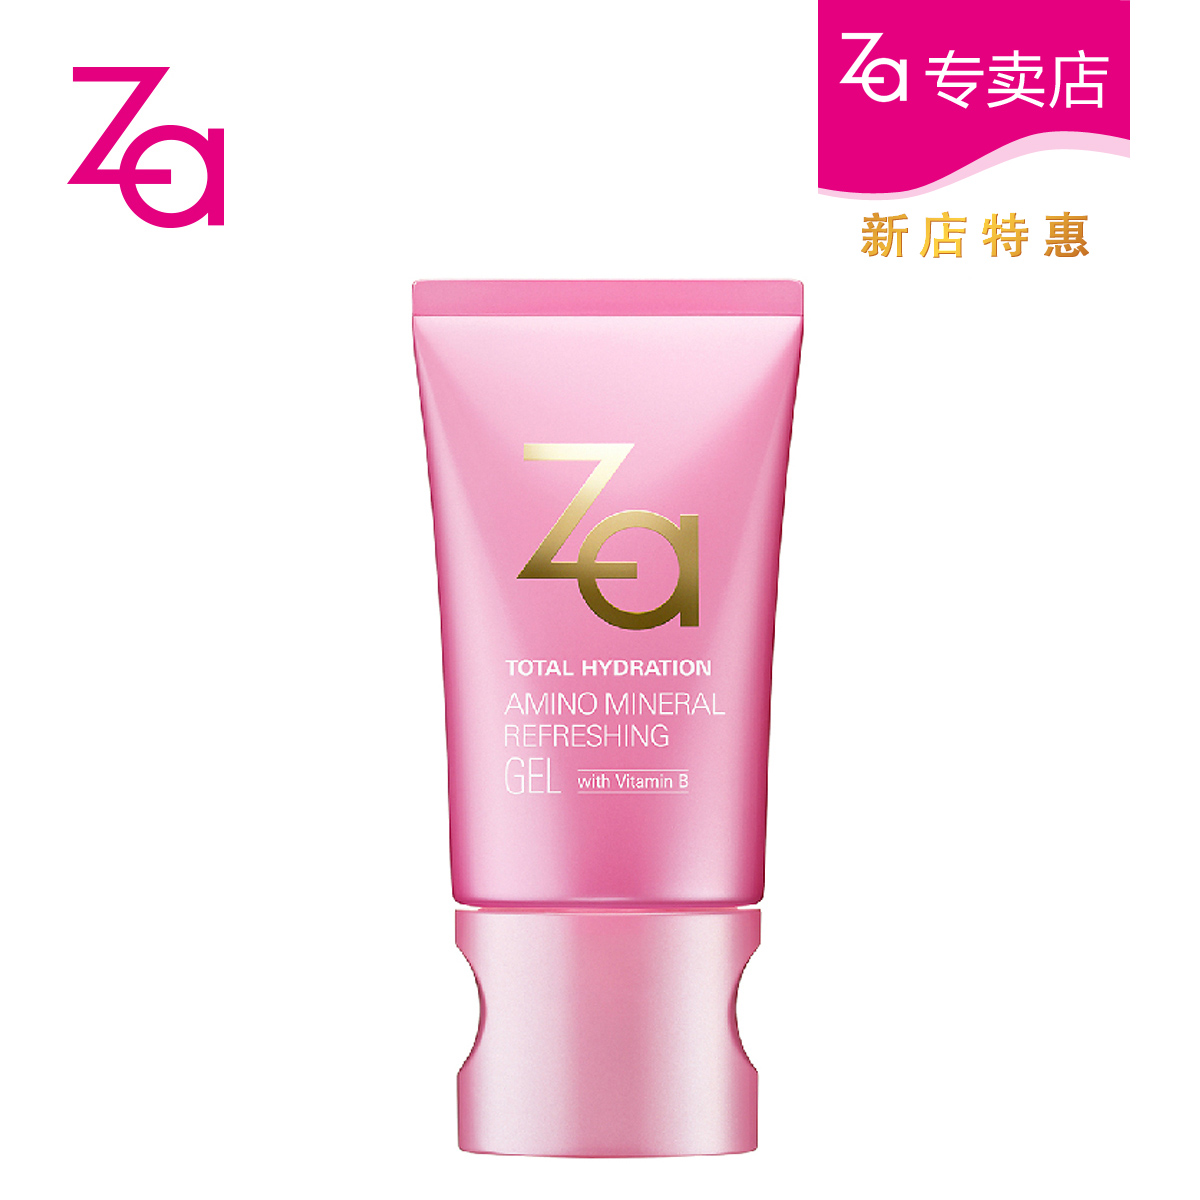 Za/姬芮 多元水活凝润保湿面霜40g 改善干燥皮肤 专柜正品 包邮